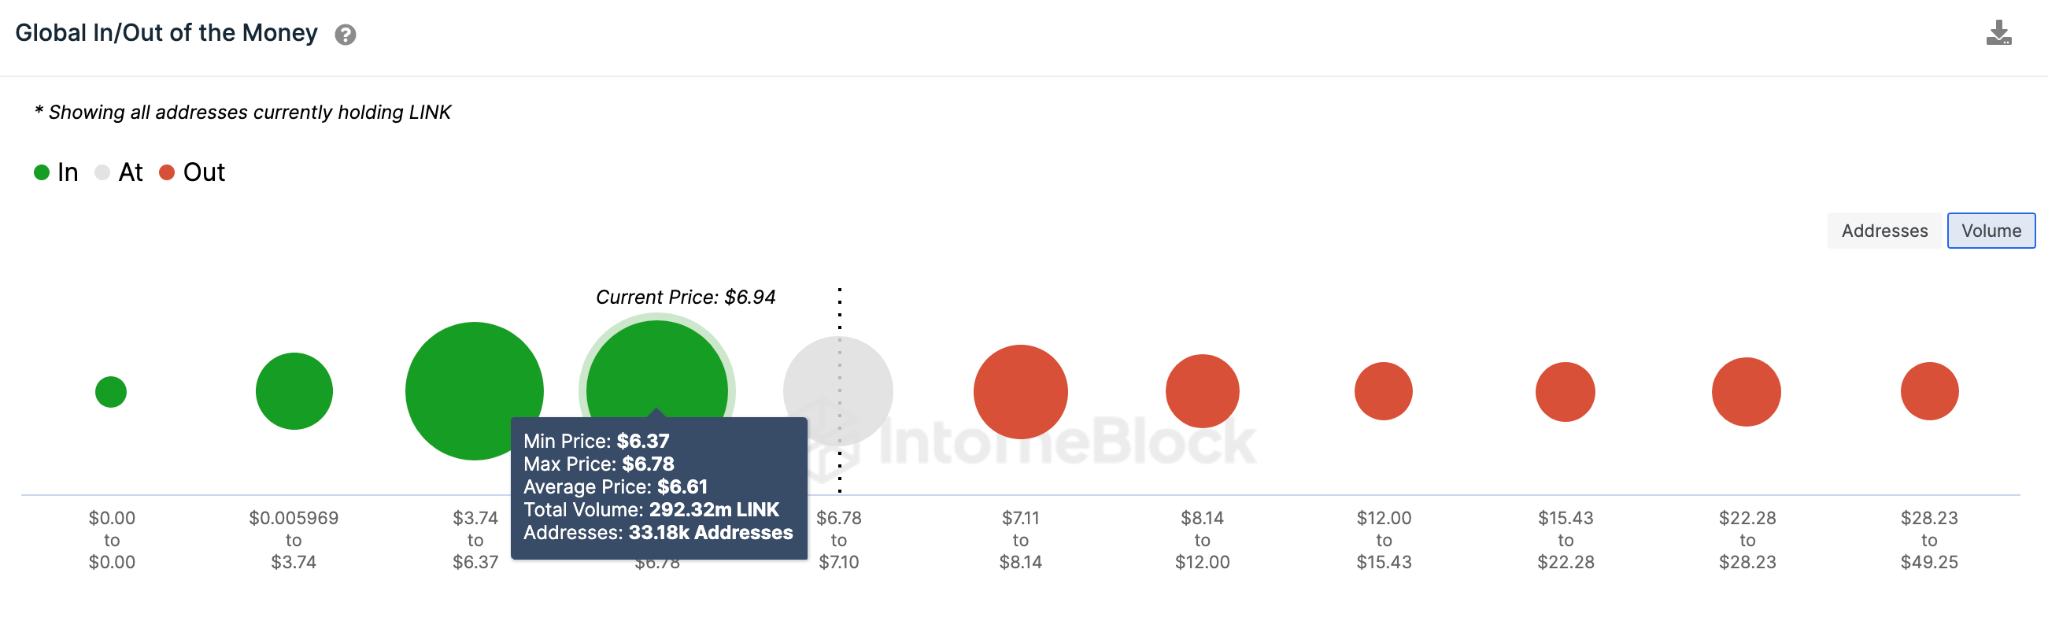 Datos de distribución de precios de Chainlink (LINK) GIOM.  Abril 2023.